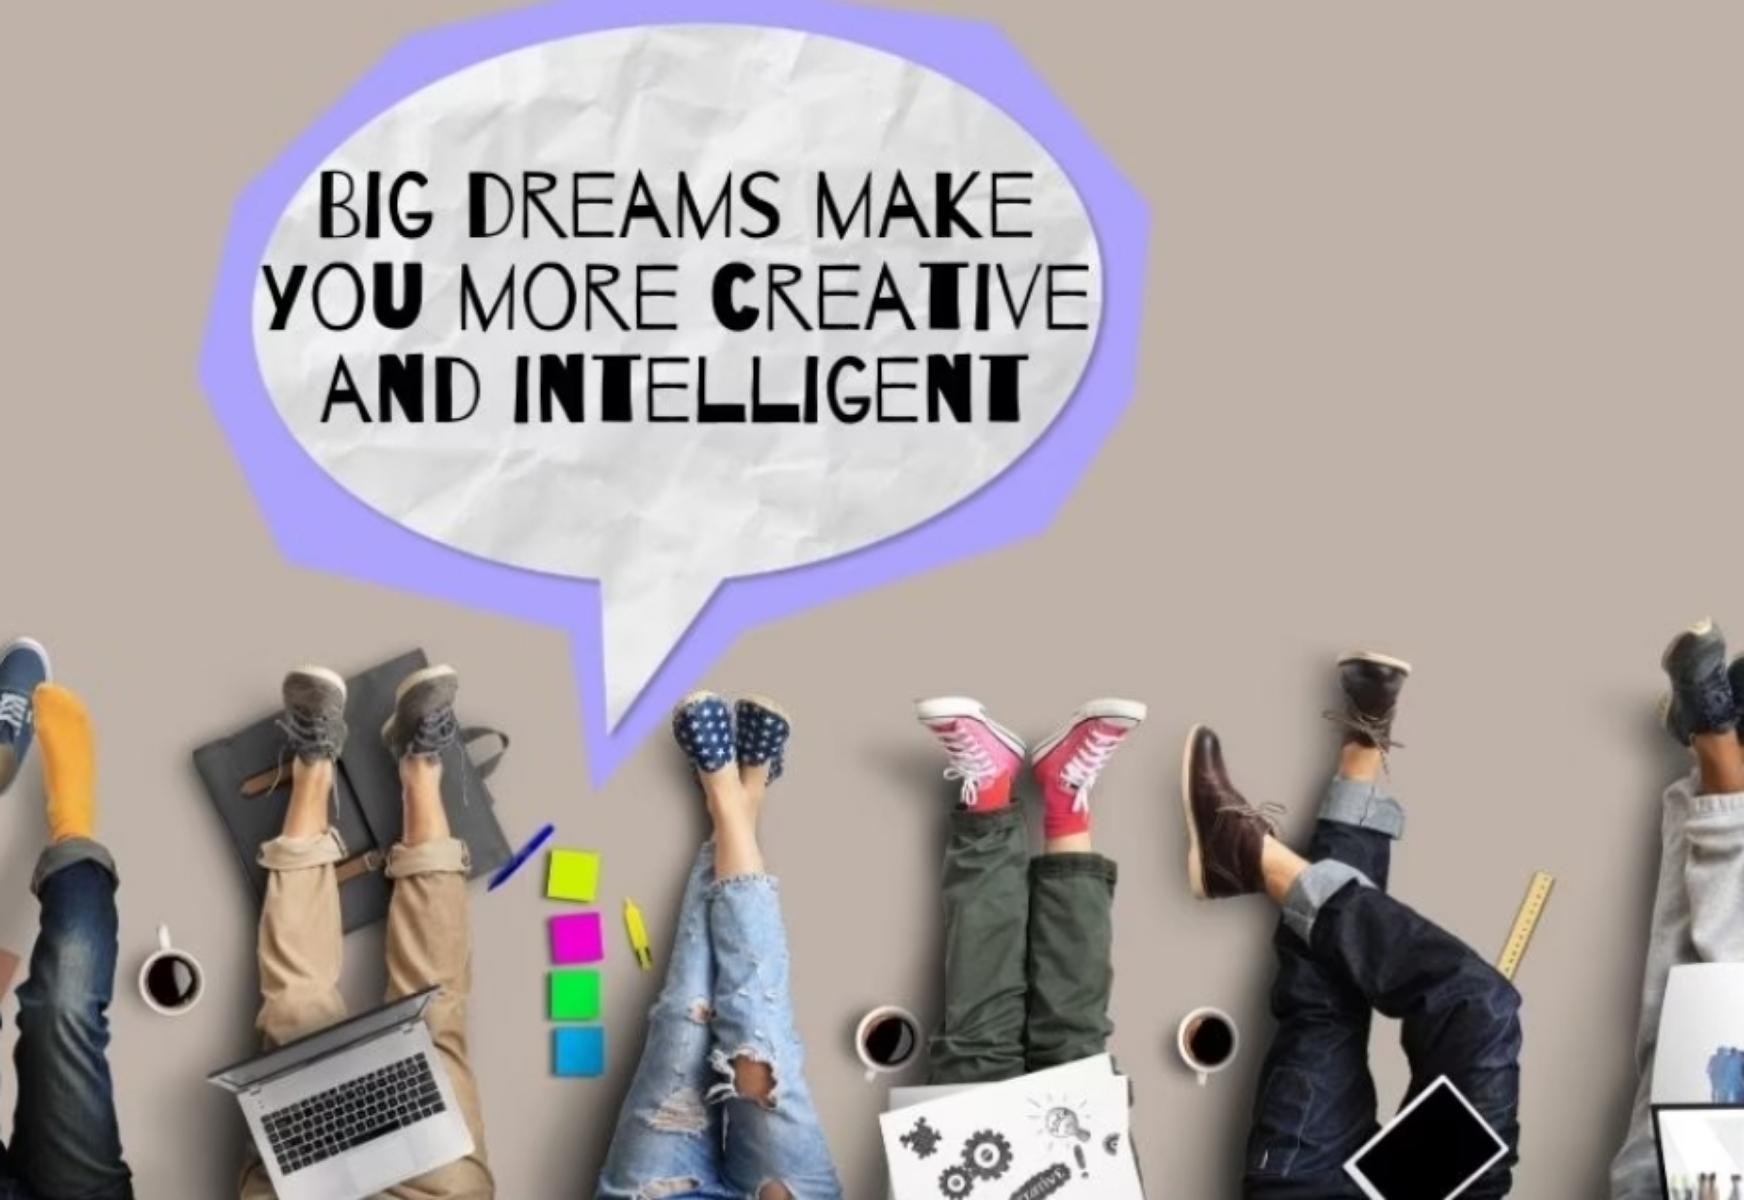 4- Big dreams make you more creative and intelligent